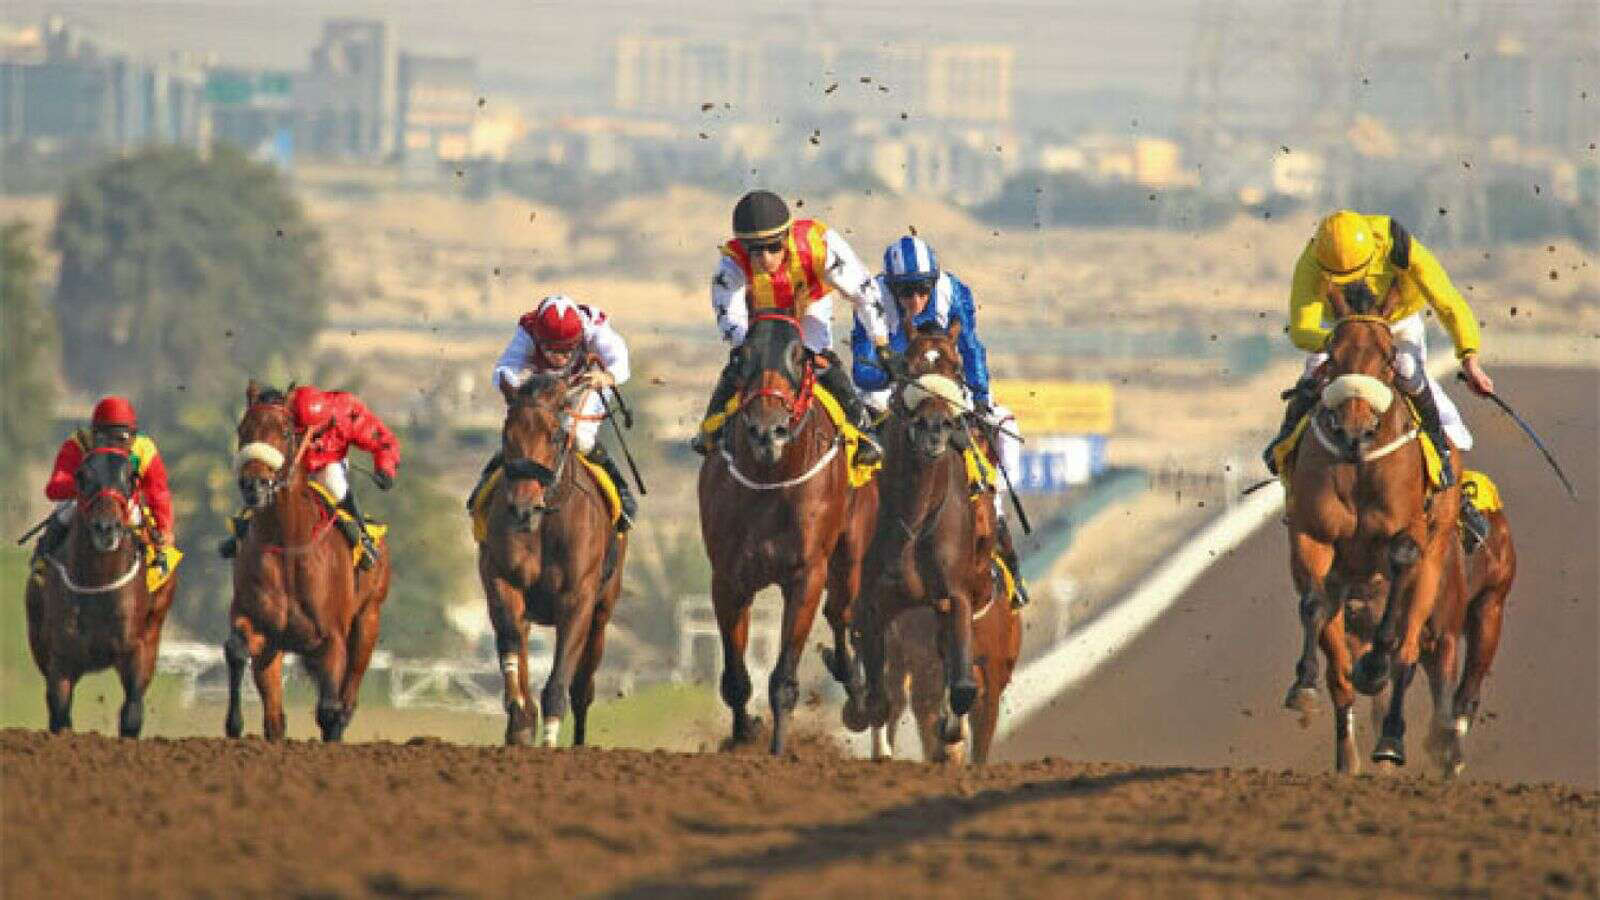 Jebel Ali Racecourse to usher in new season of hope and change